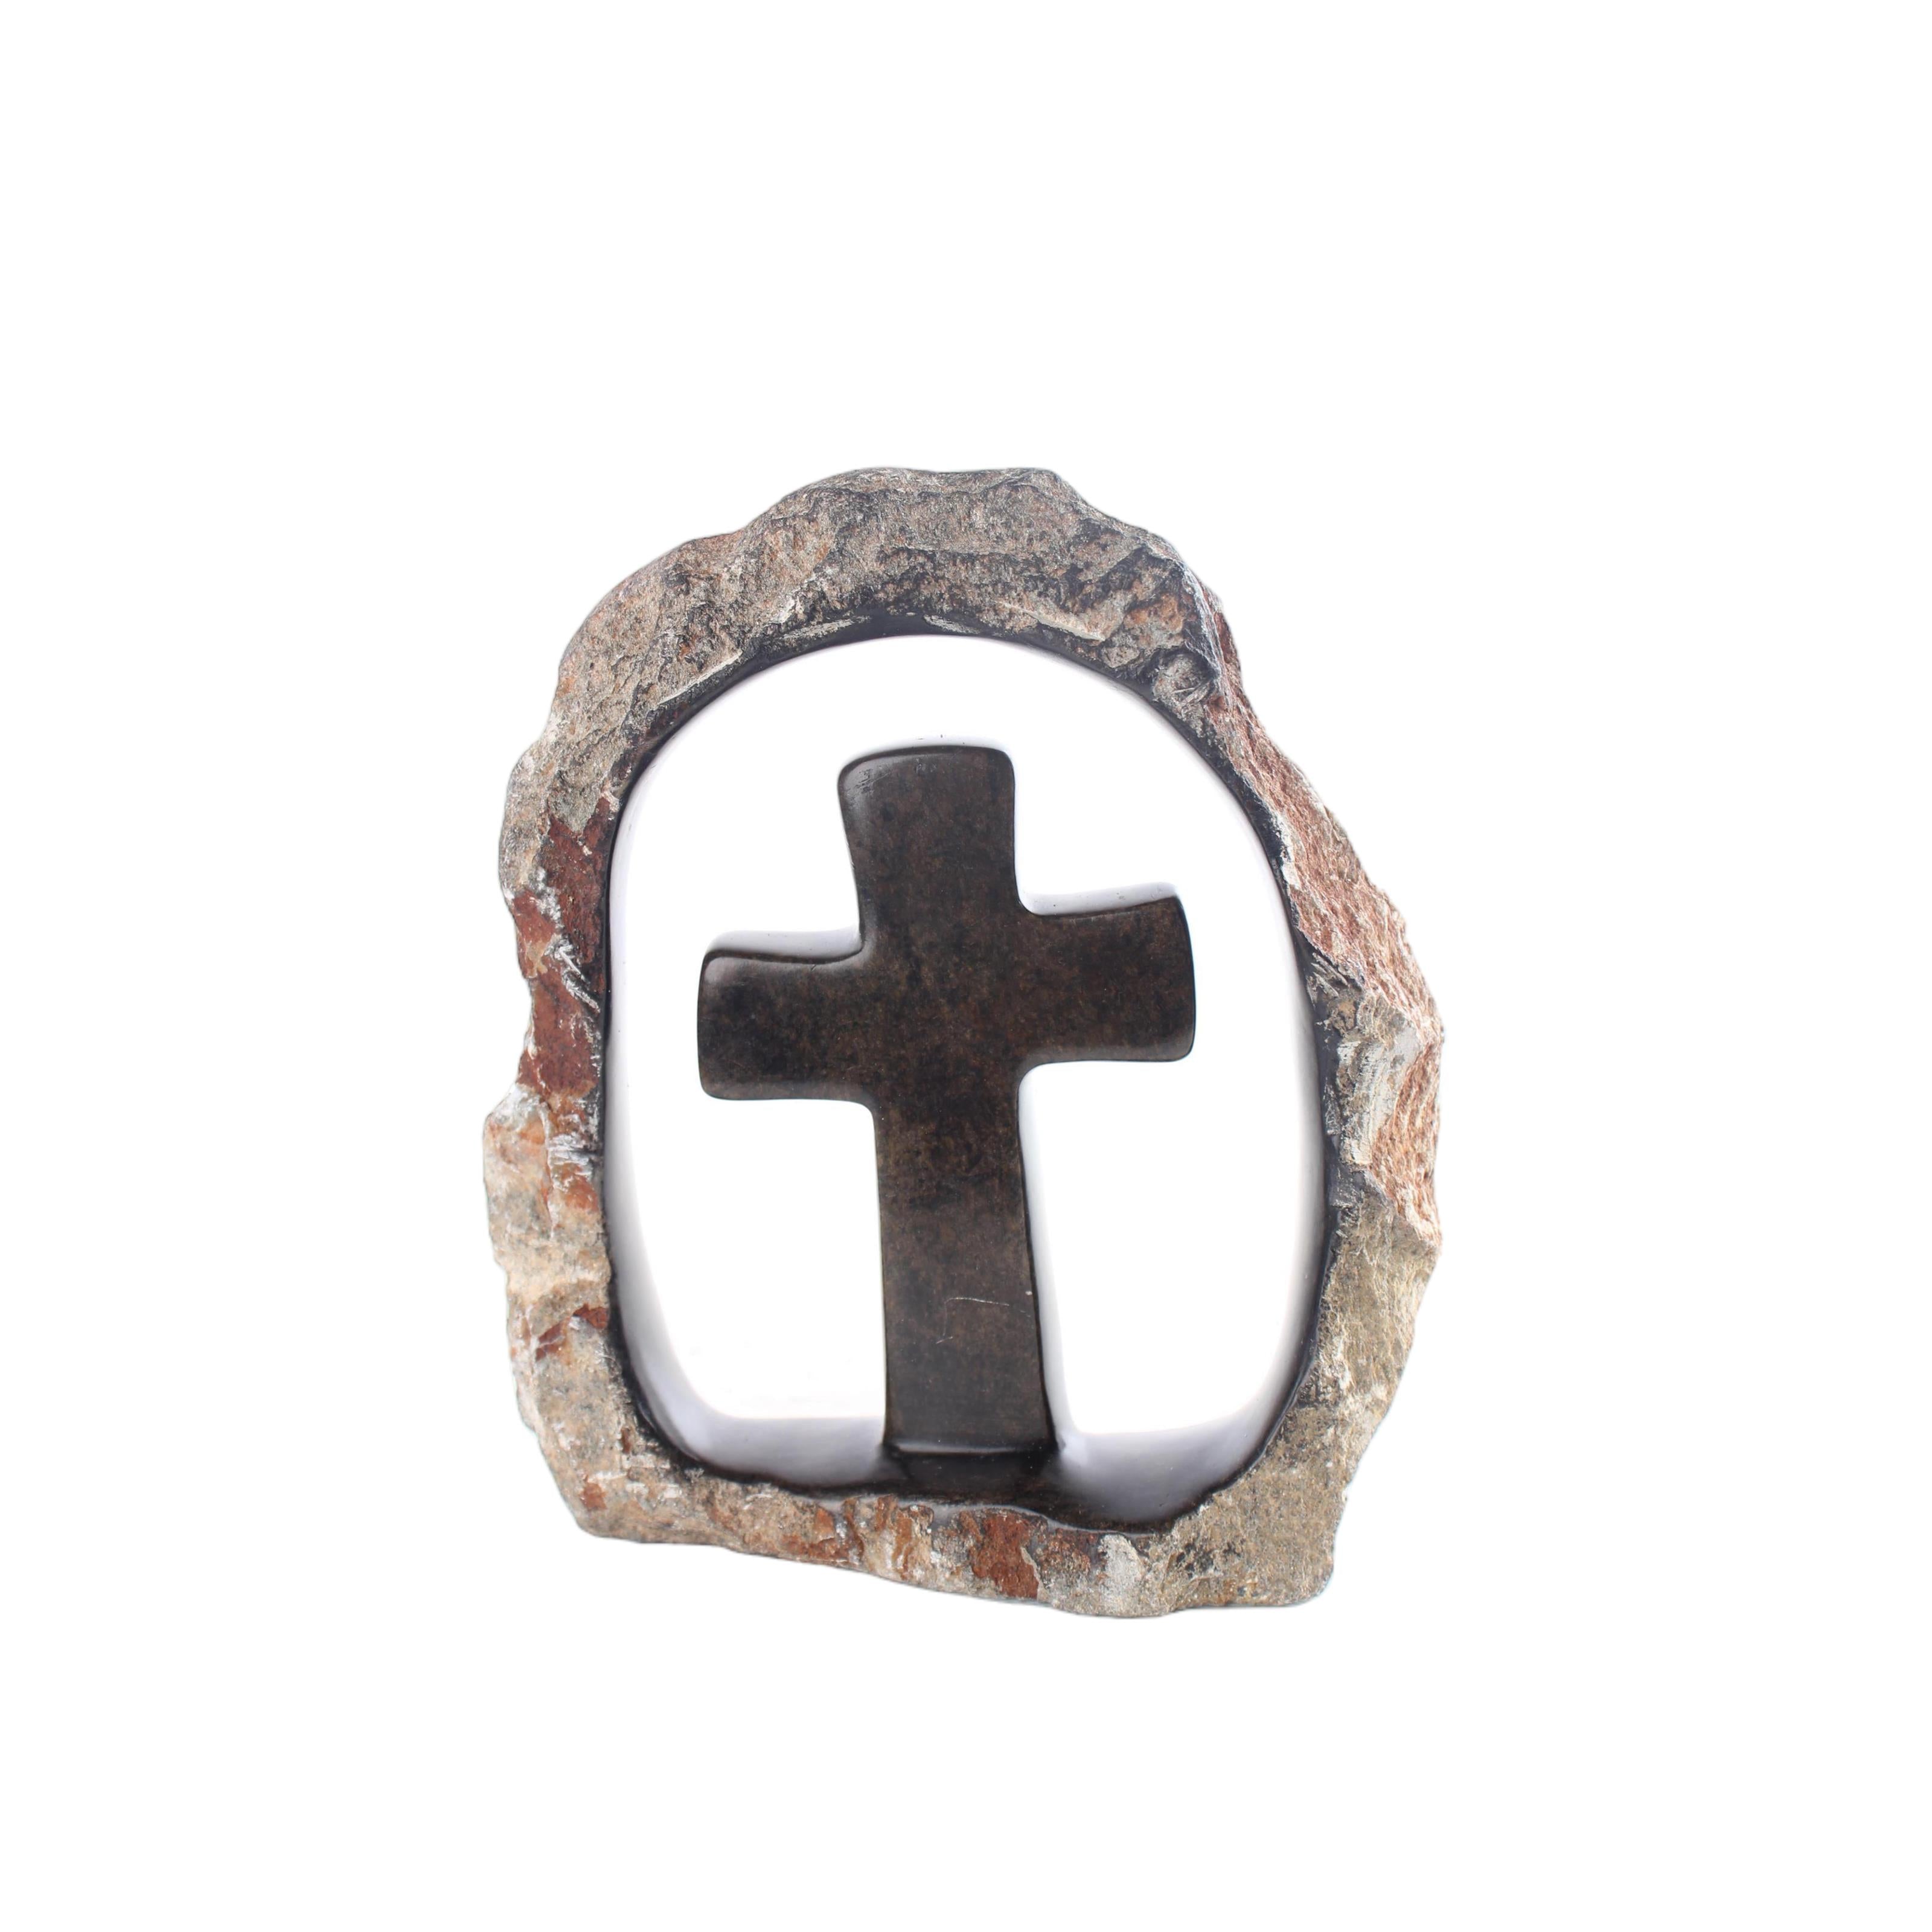 Shona Tribe Serpentine Stone Crosses  ~7.1" Tall - Crosses